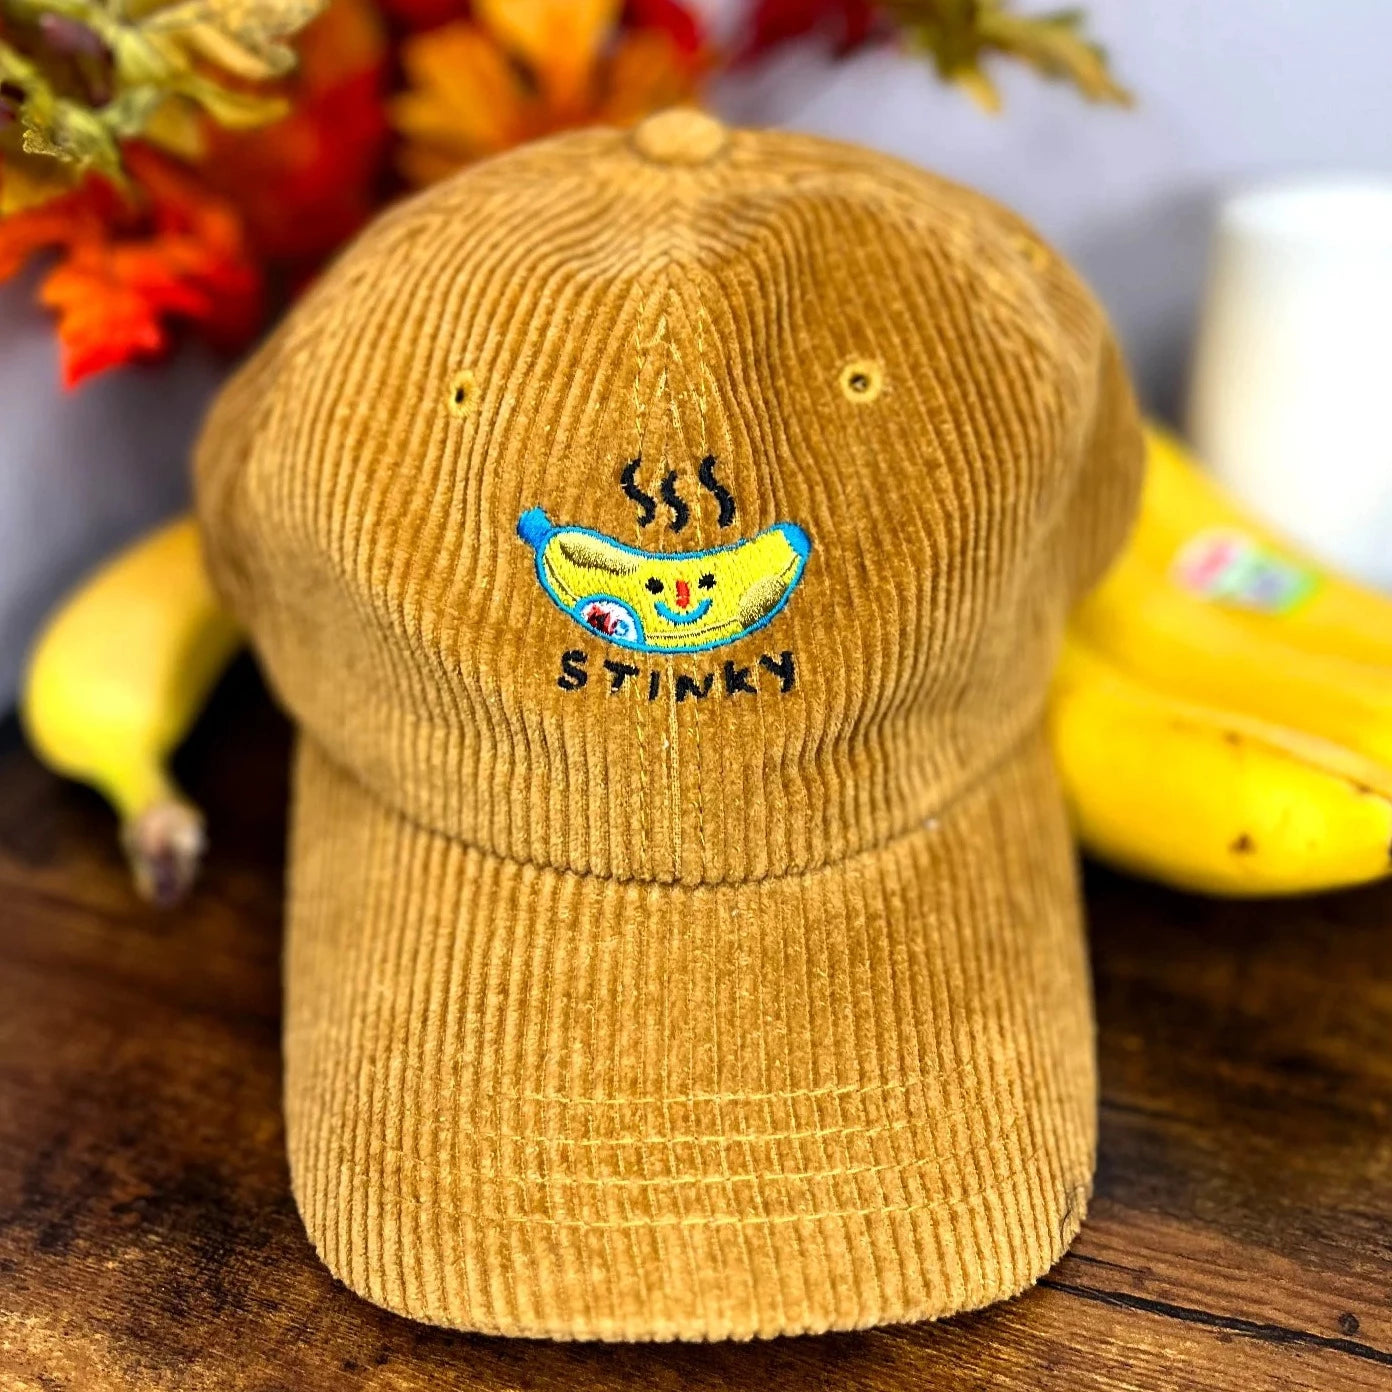 Stinky Banana Corduroy Hat